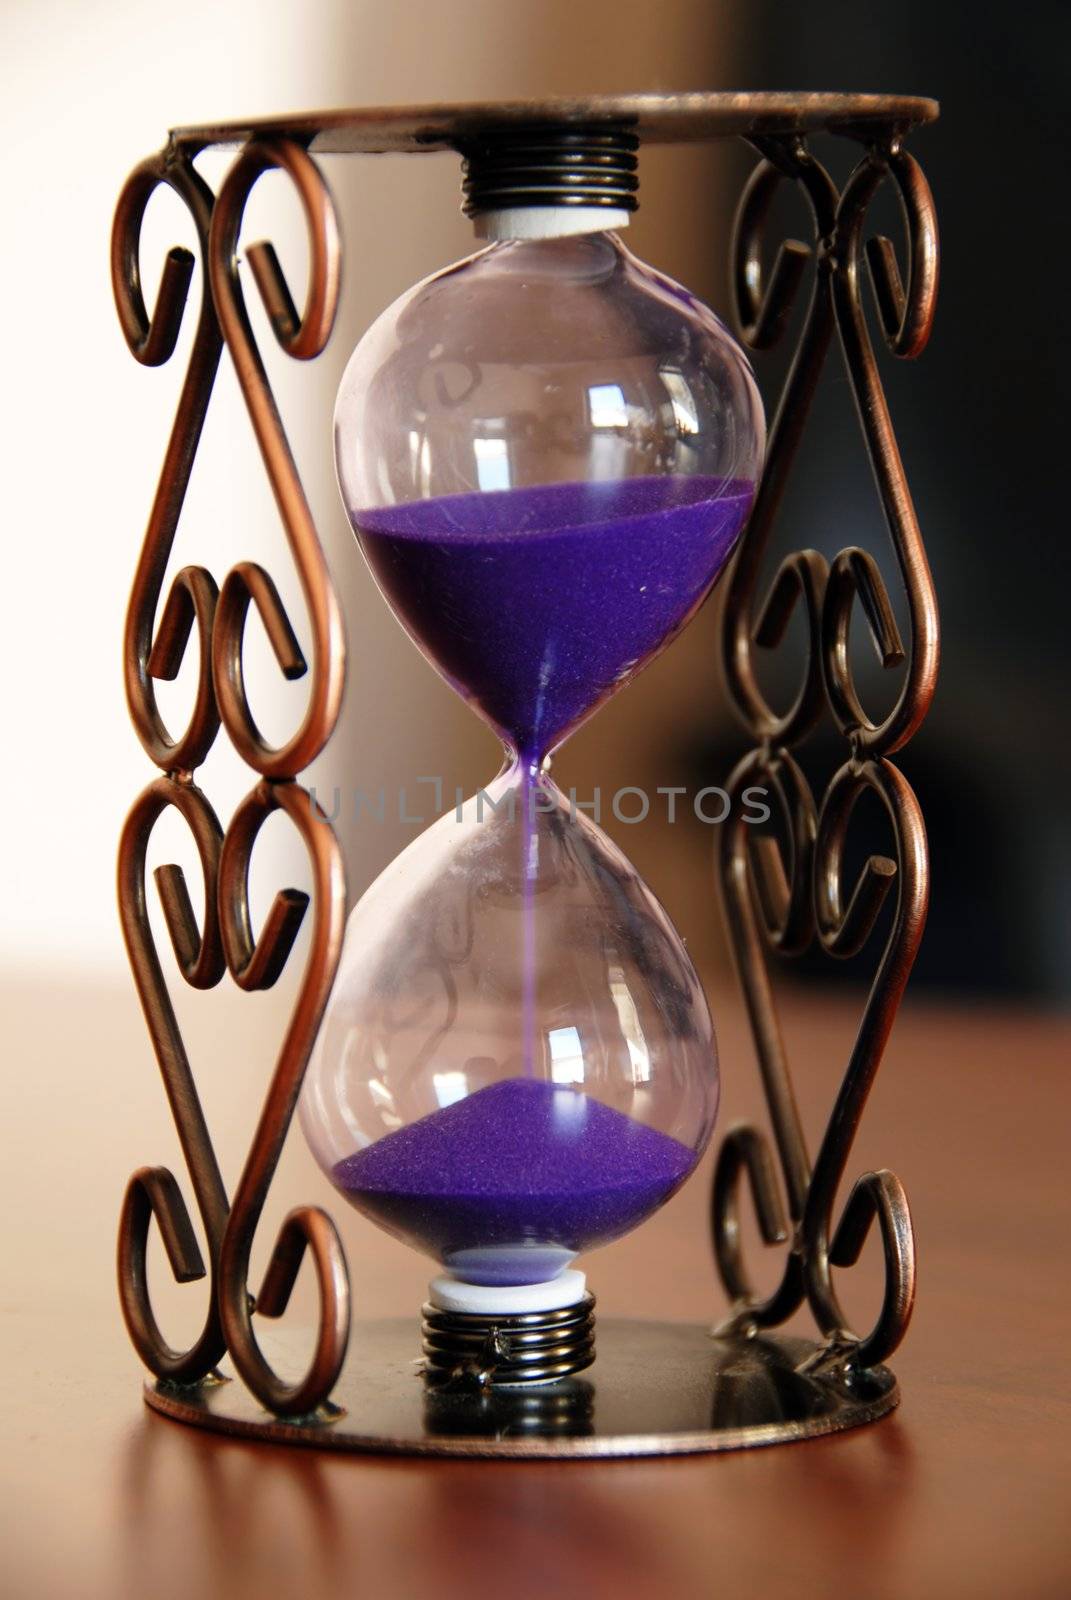 sand clock on desk closeup, time passing concept